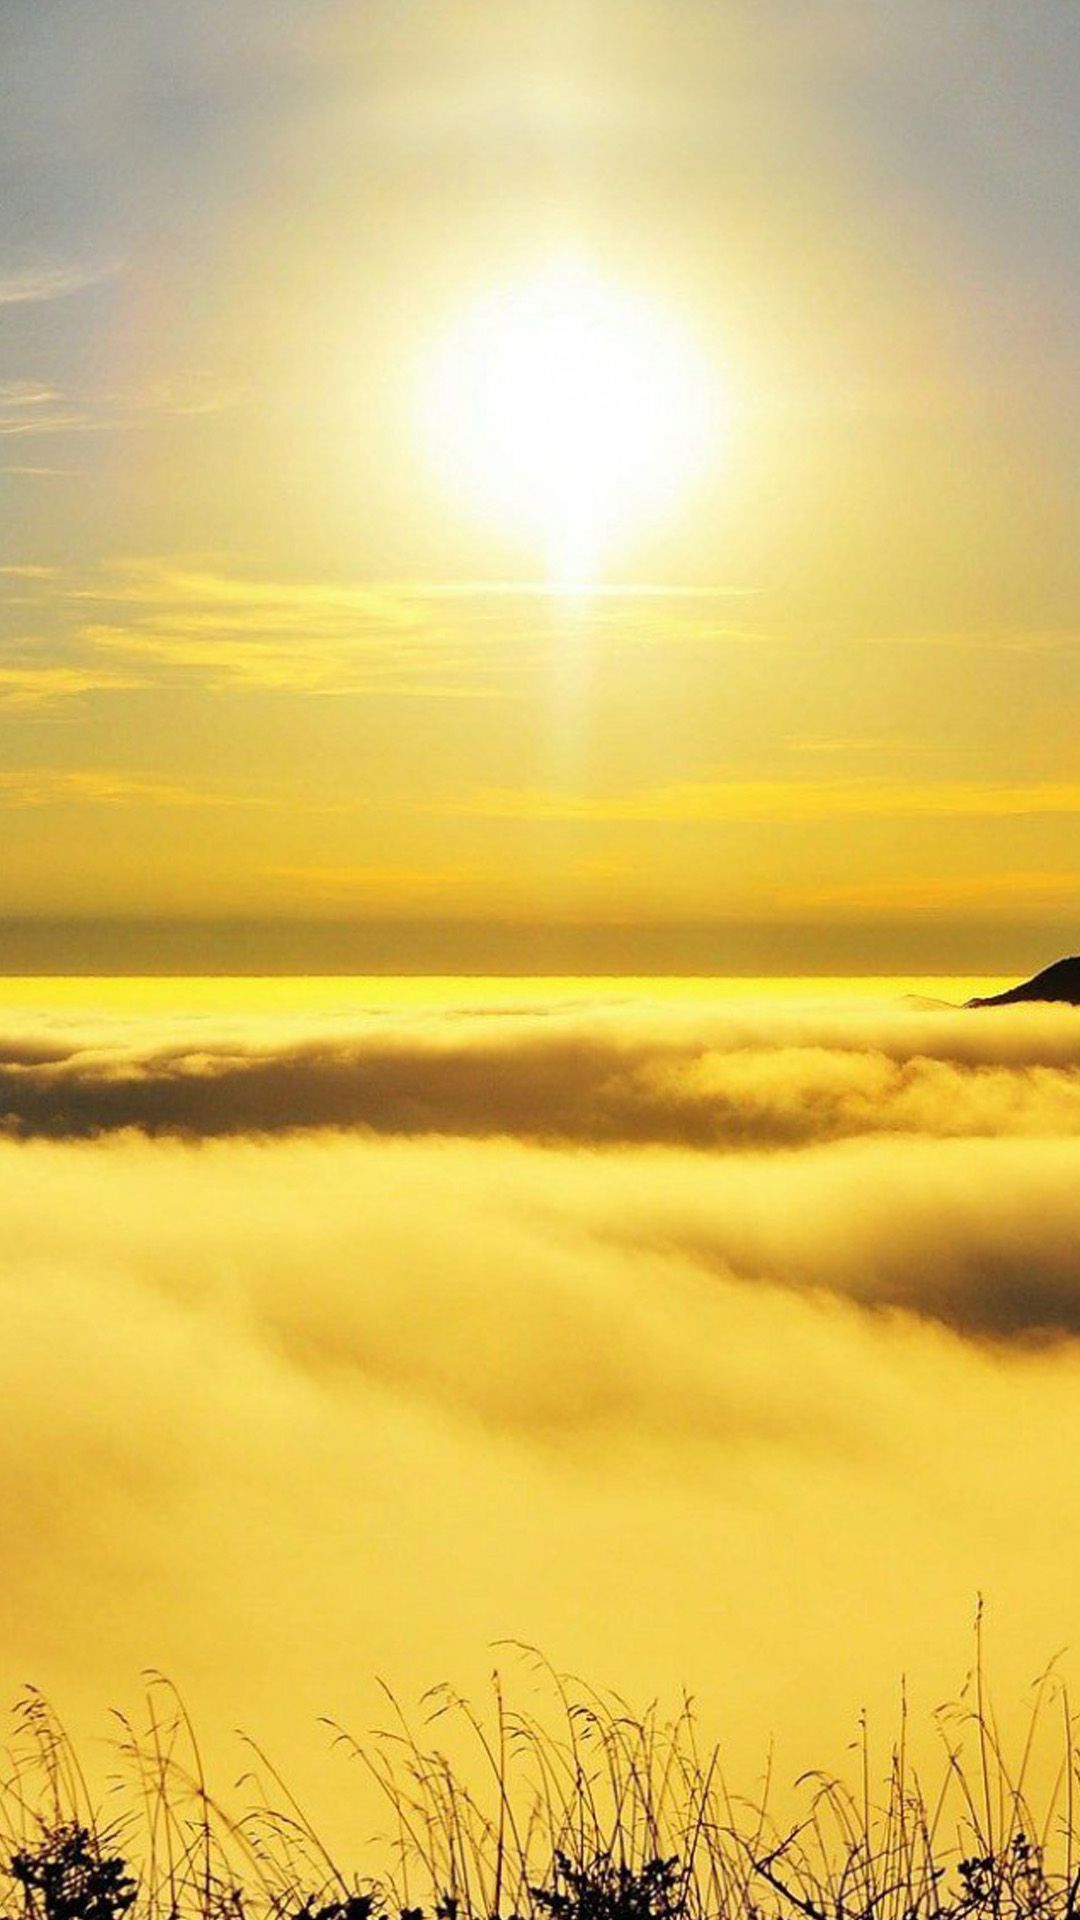 Mountain Peak Sunset Landscape IPhone 6 Wallpaper Download. IPhone Wallpaper, IPad Wallpaper One S. Sunset Landscape, Sunset Iphone Wallpaper, Yellow Wallpaper